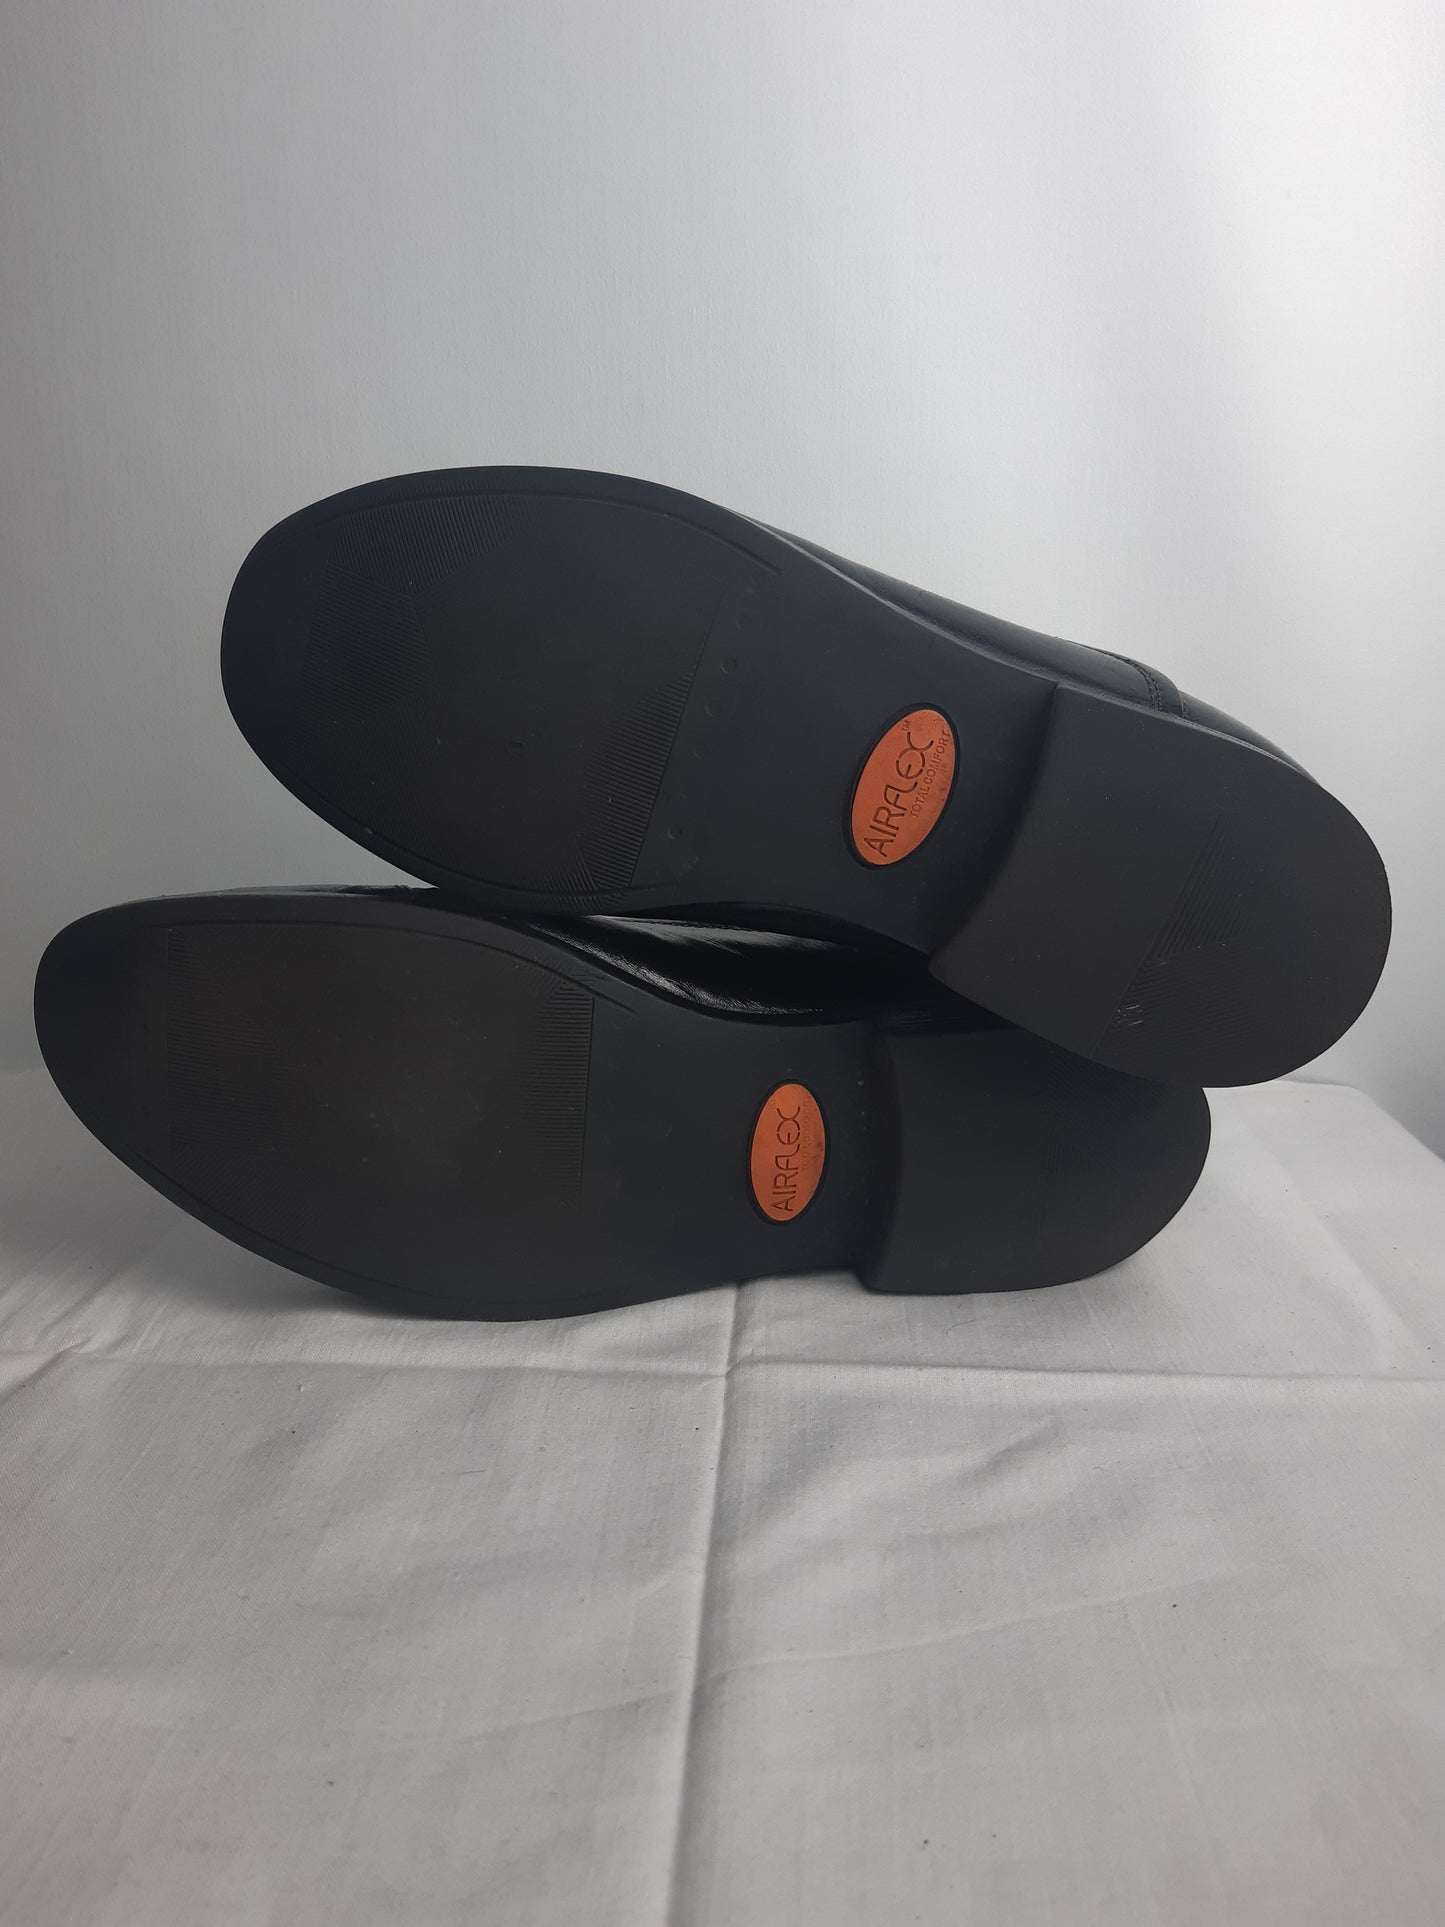 M&S Black Leather Shoes Size 8 1/2